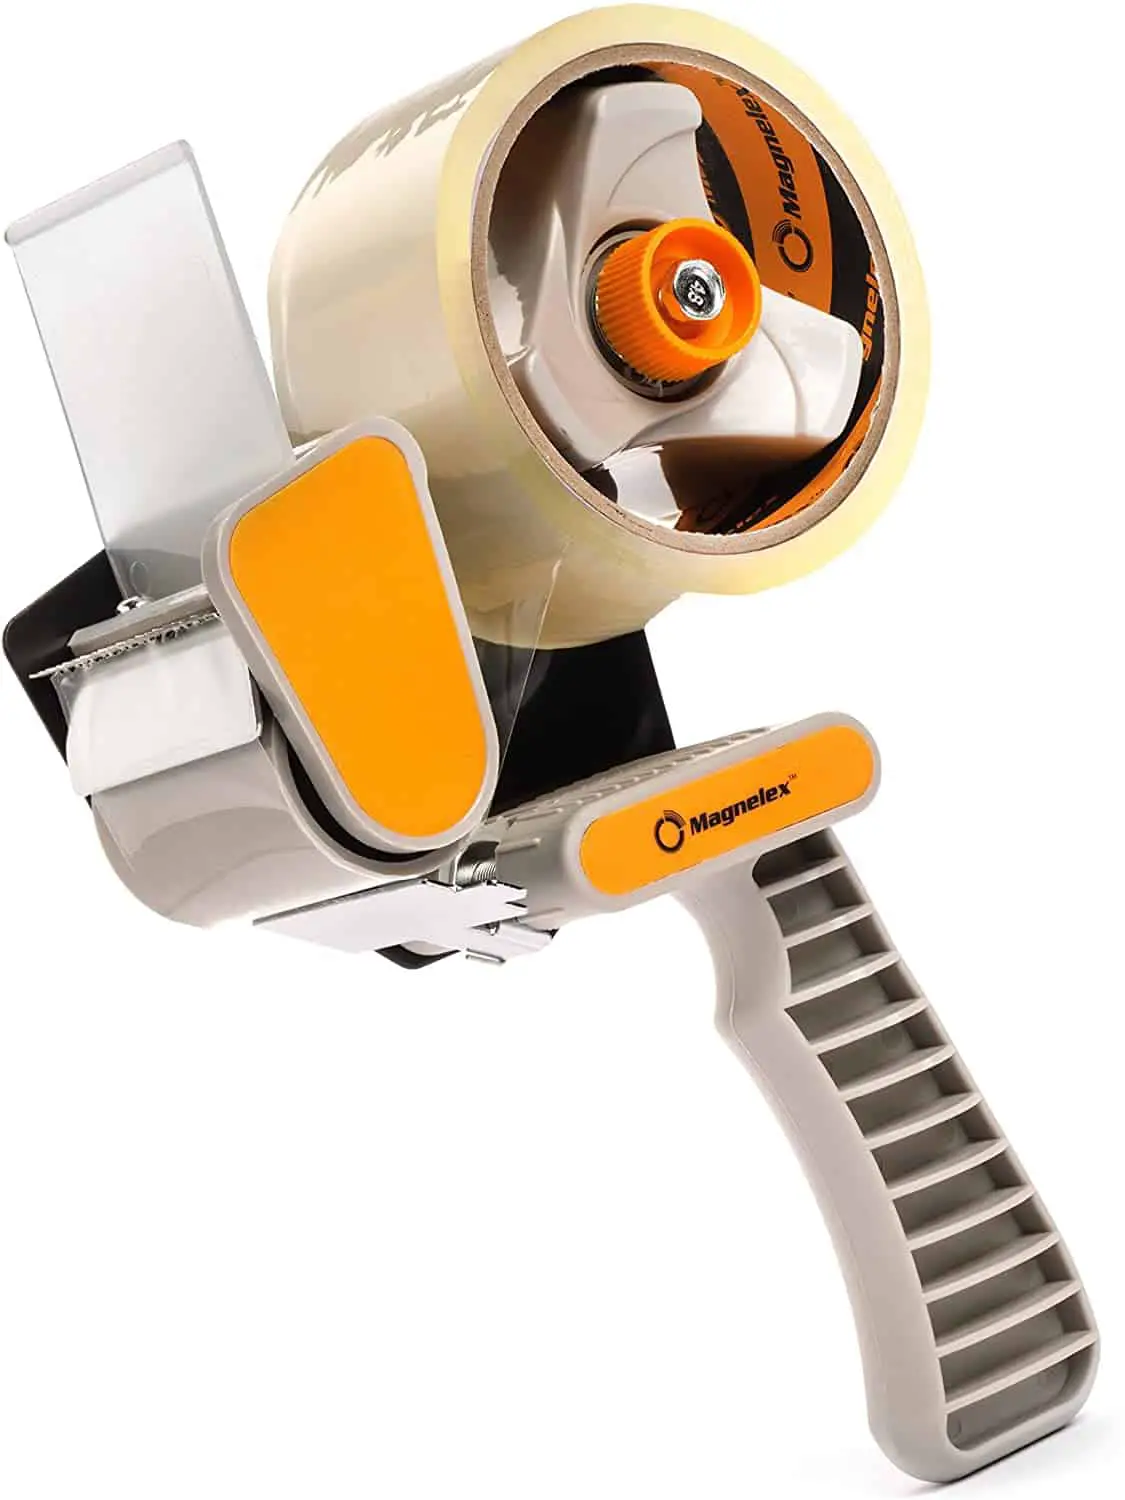 Tape gun with smoothest dispenser- Magnelex Tapexpert